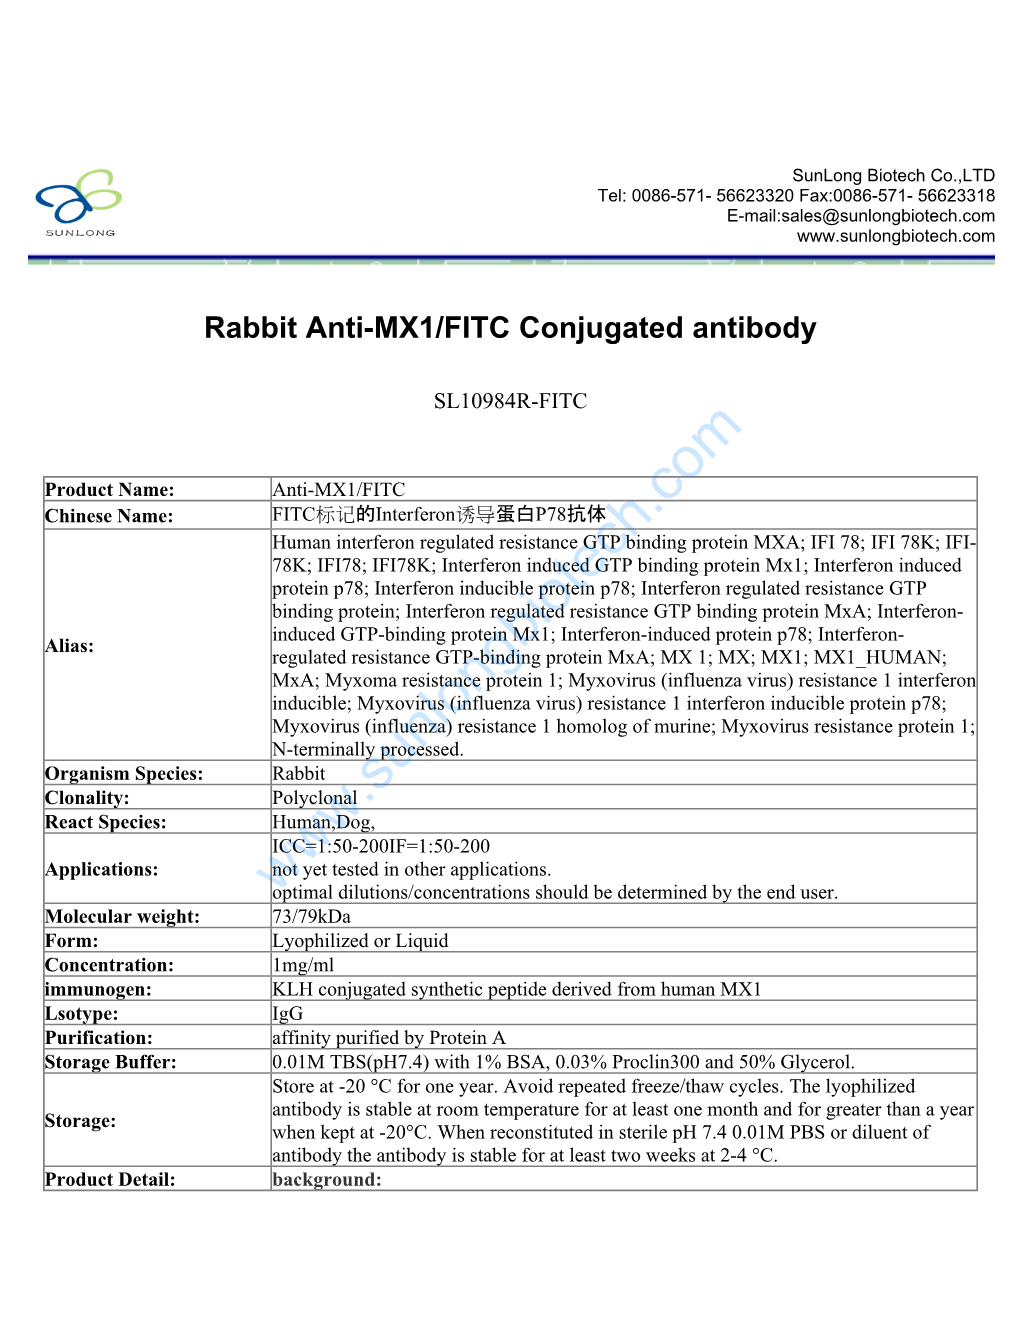 Rabbit Anti-MX1/FITC Conjugated Antibody